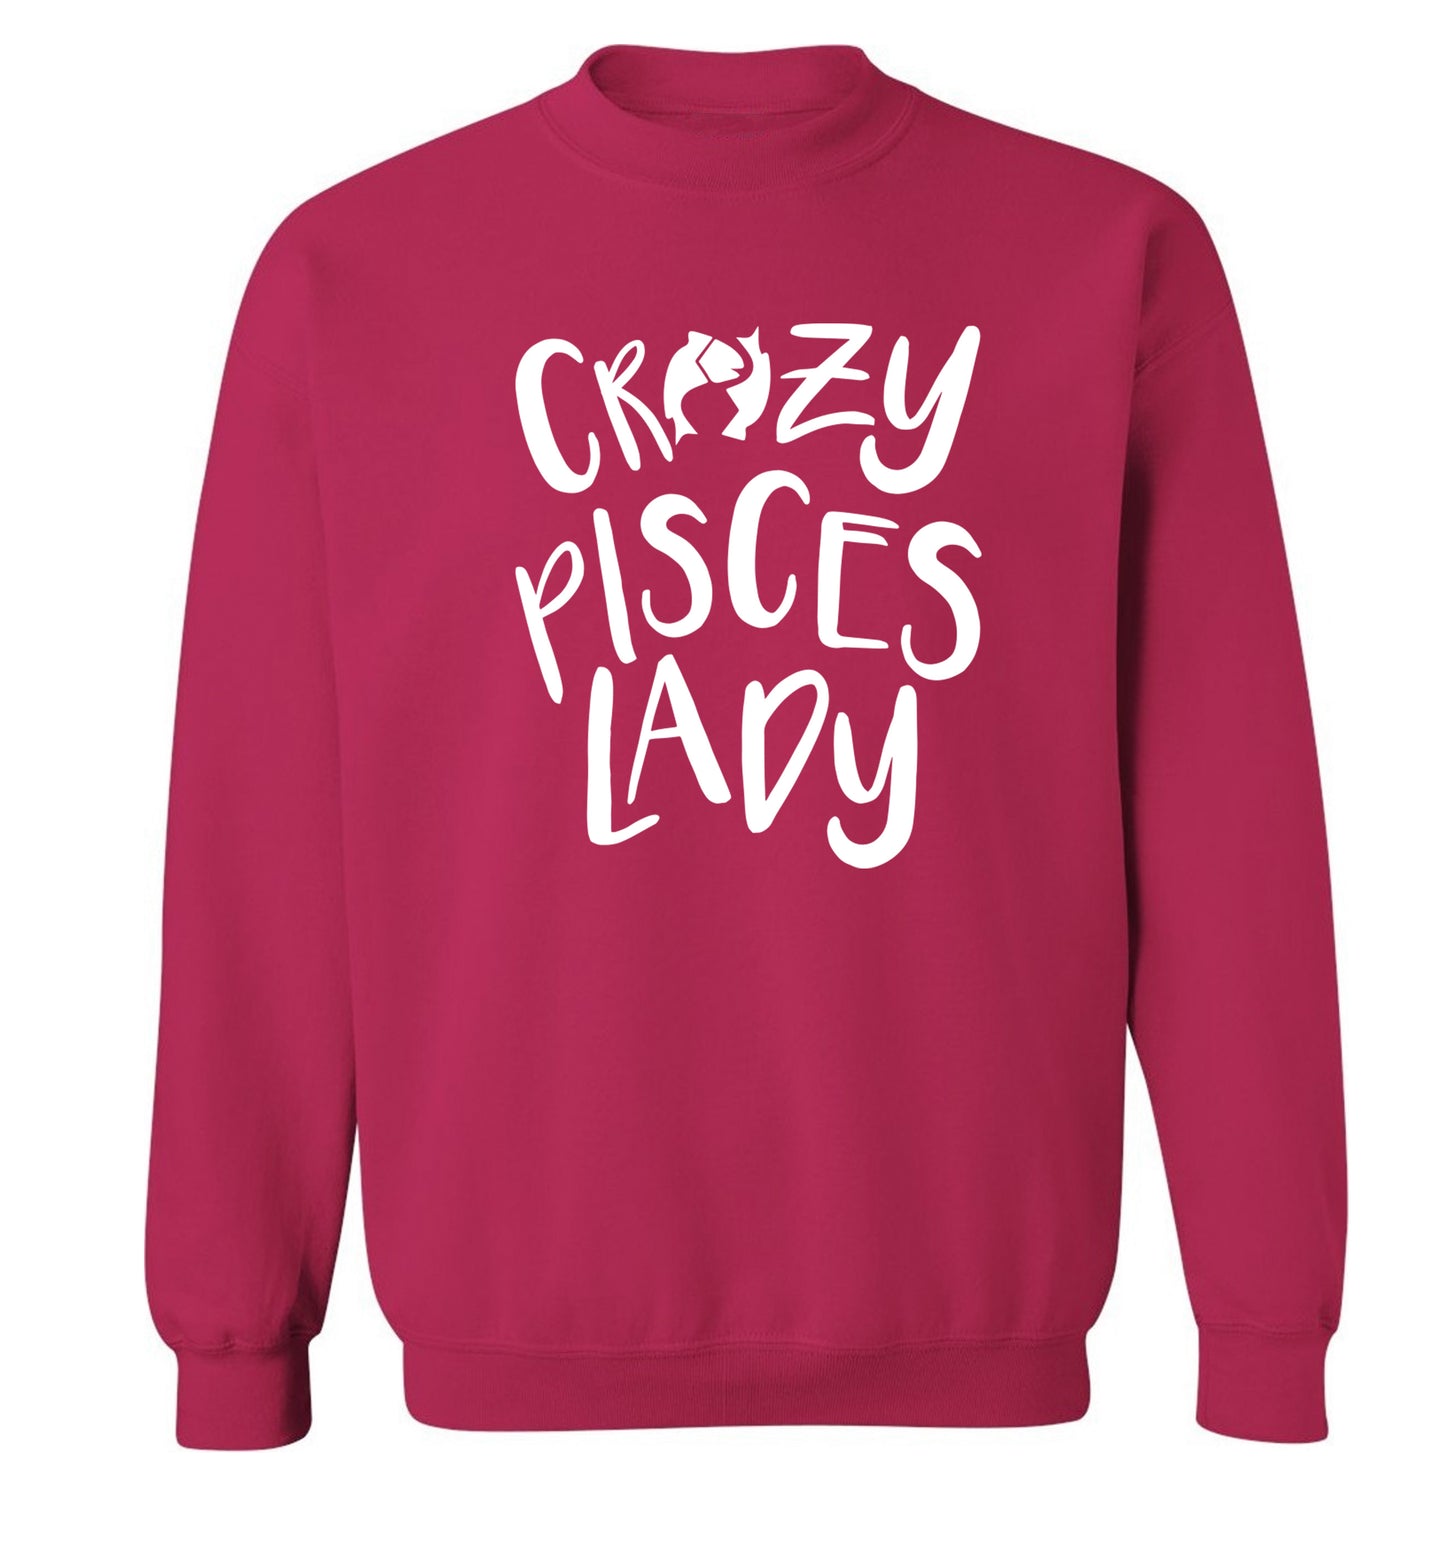 Crazy pisces Lady Adult's unisex pink Sweater 2XL